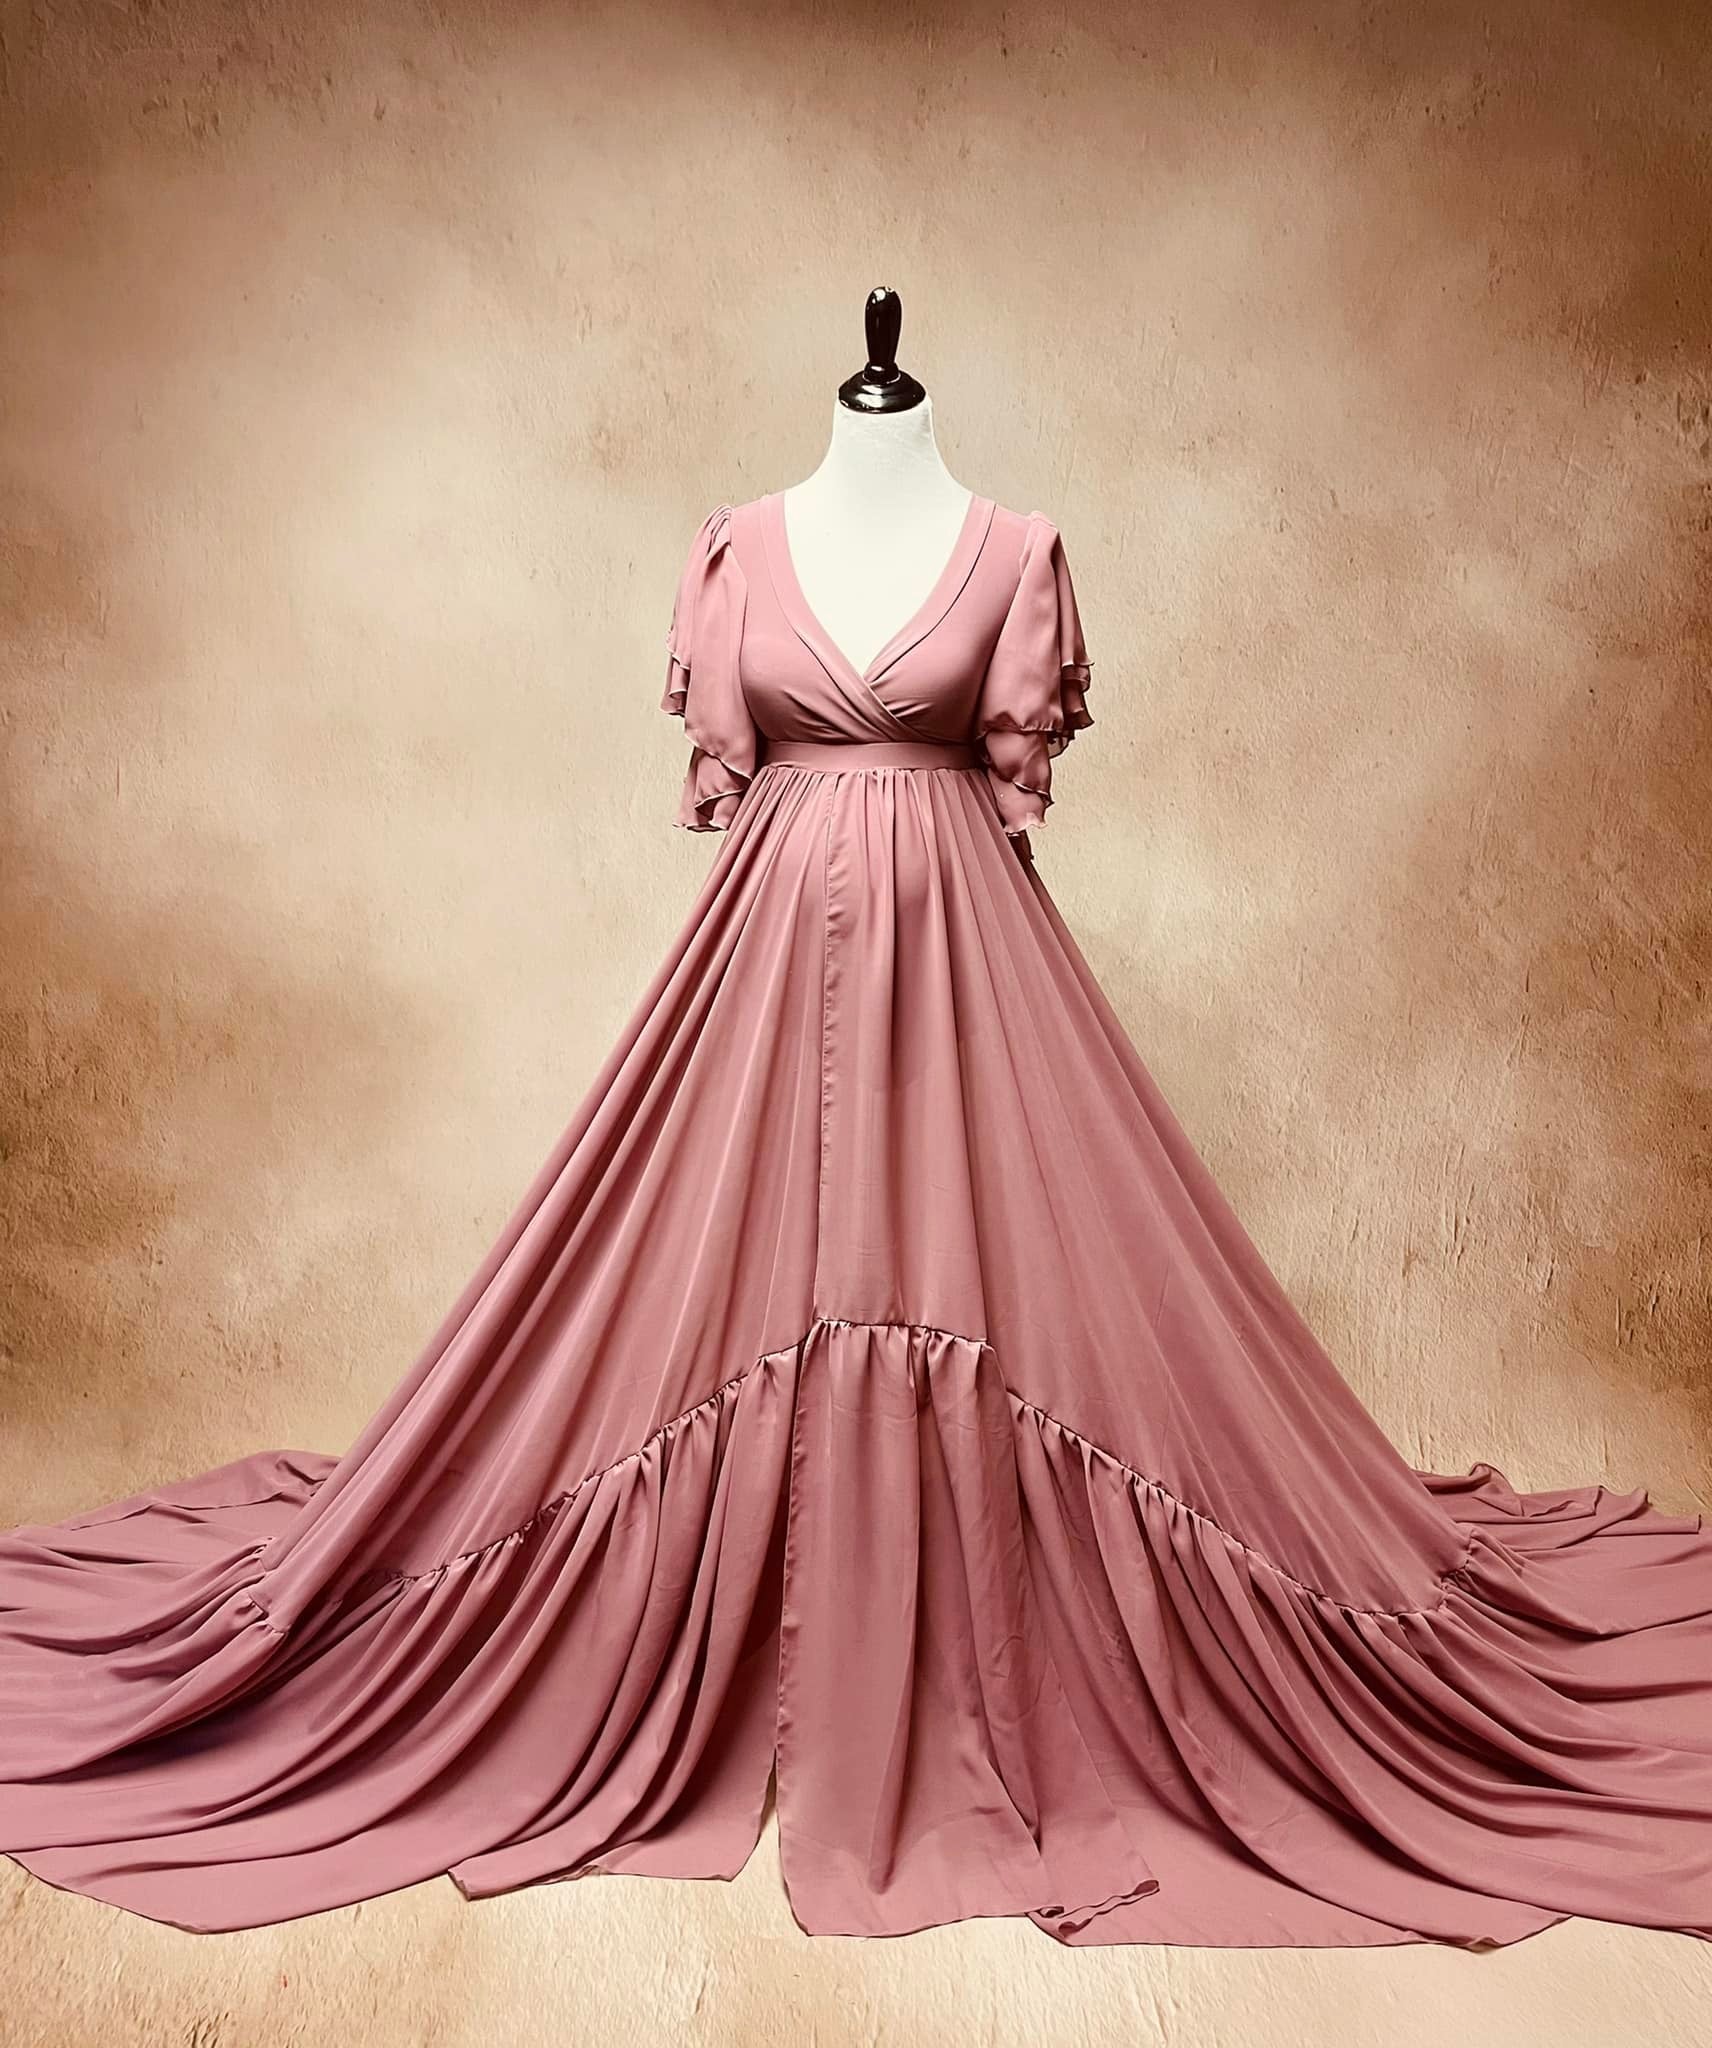 Mauve Pink Tallulah Gown - maternity photoshoot dress